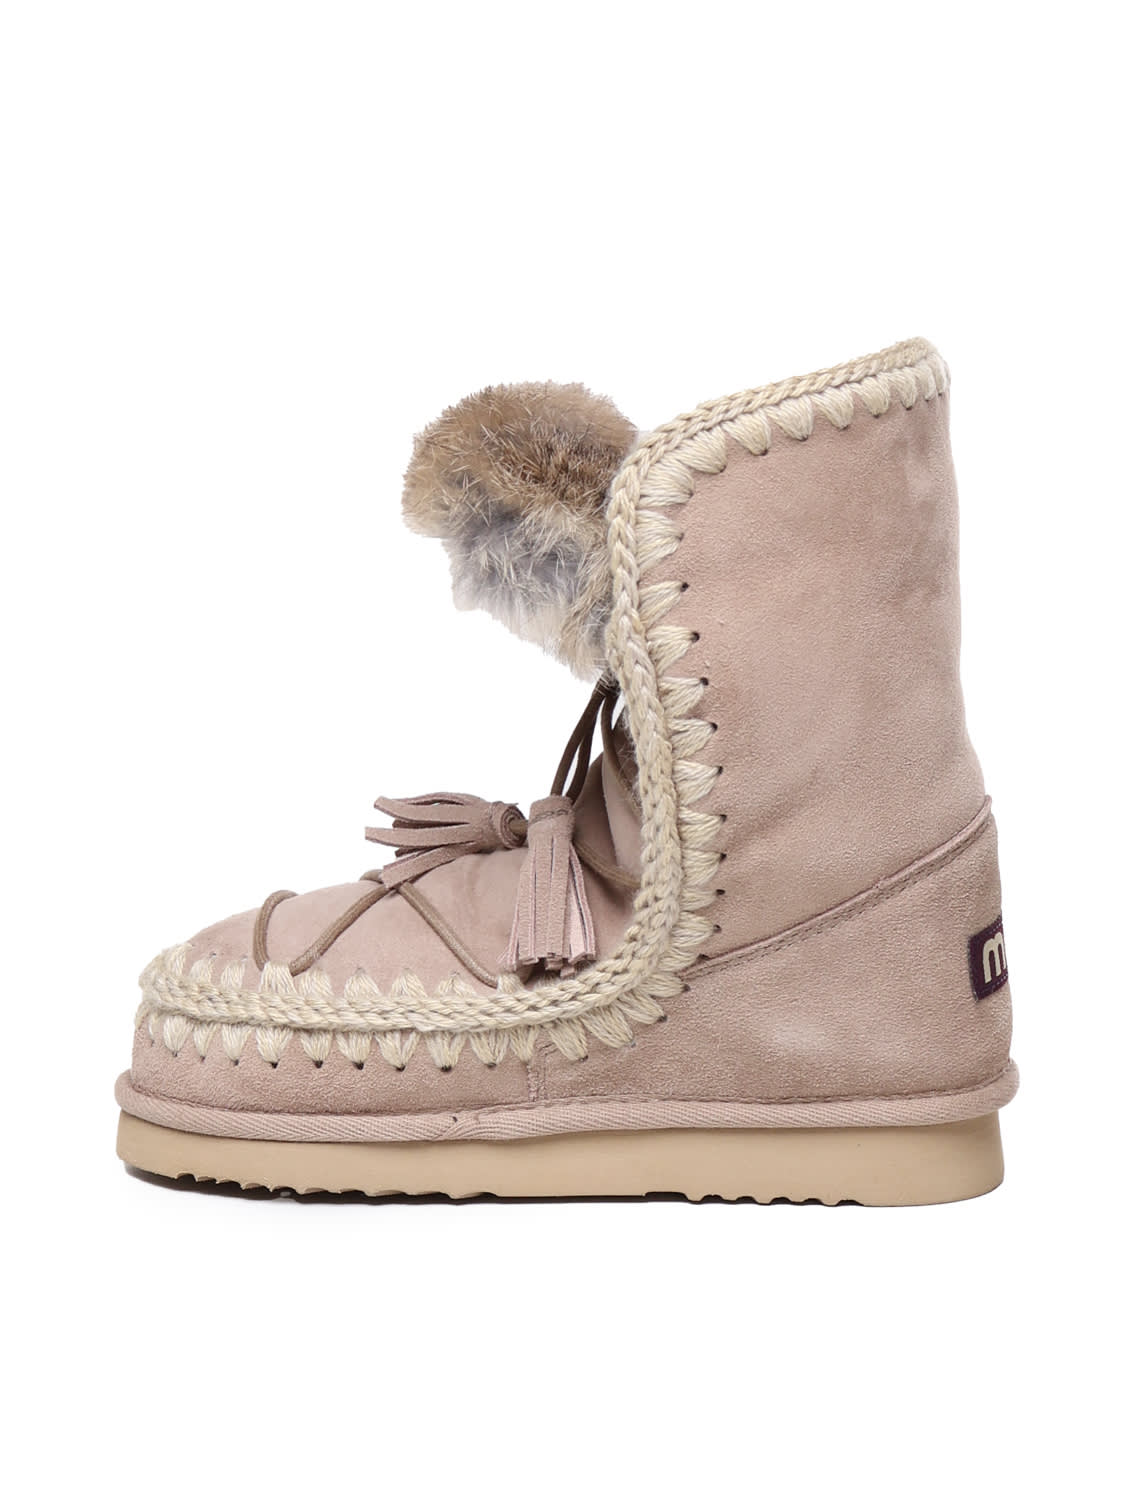 Shop Mou Eskimo Dream Boots In Beige